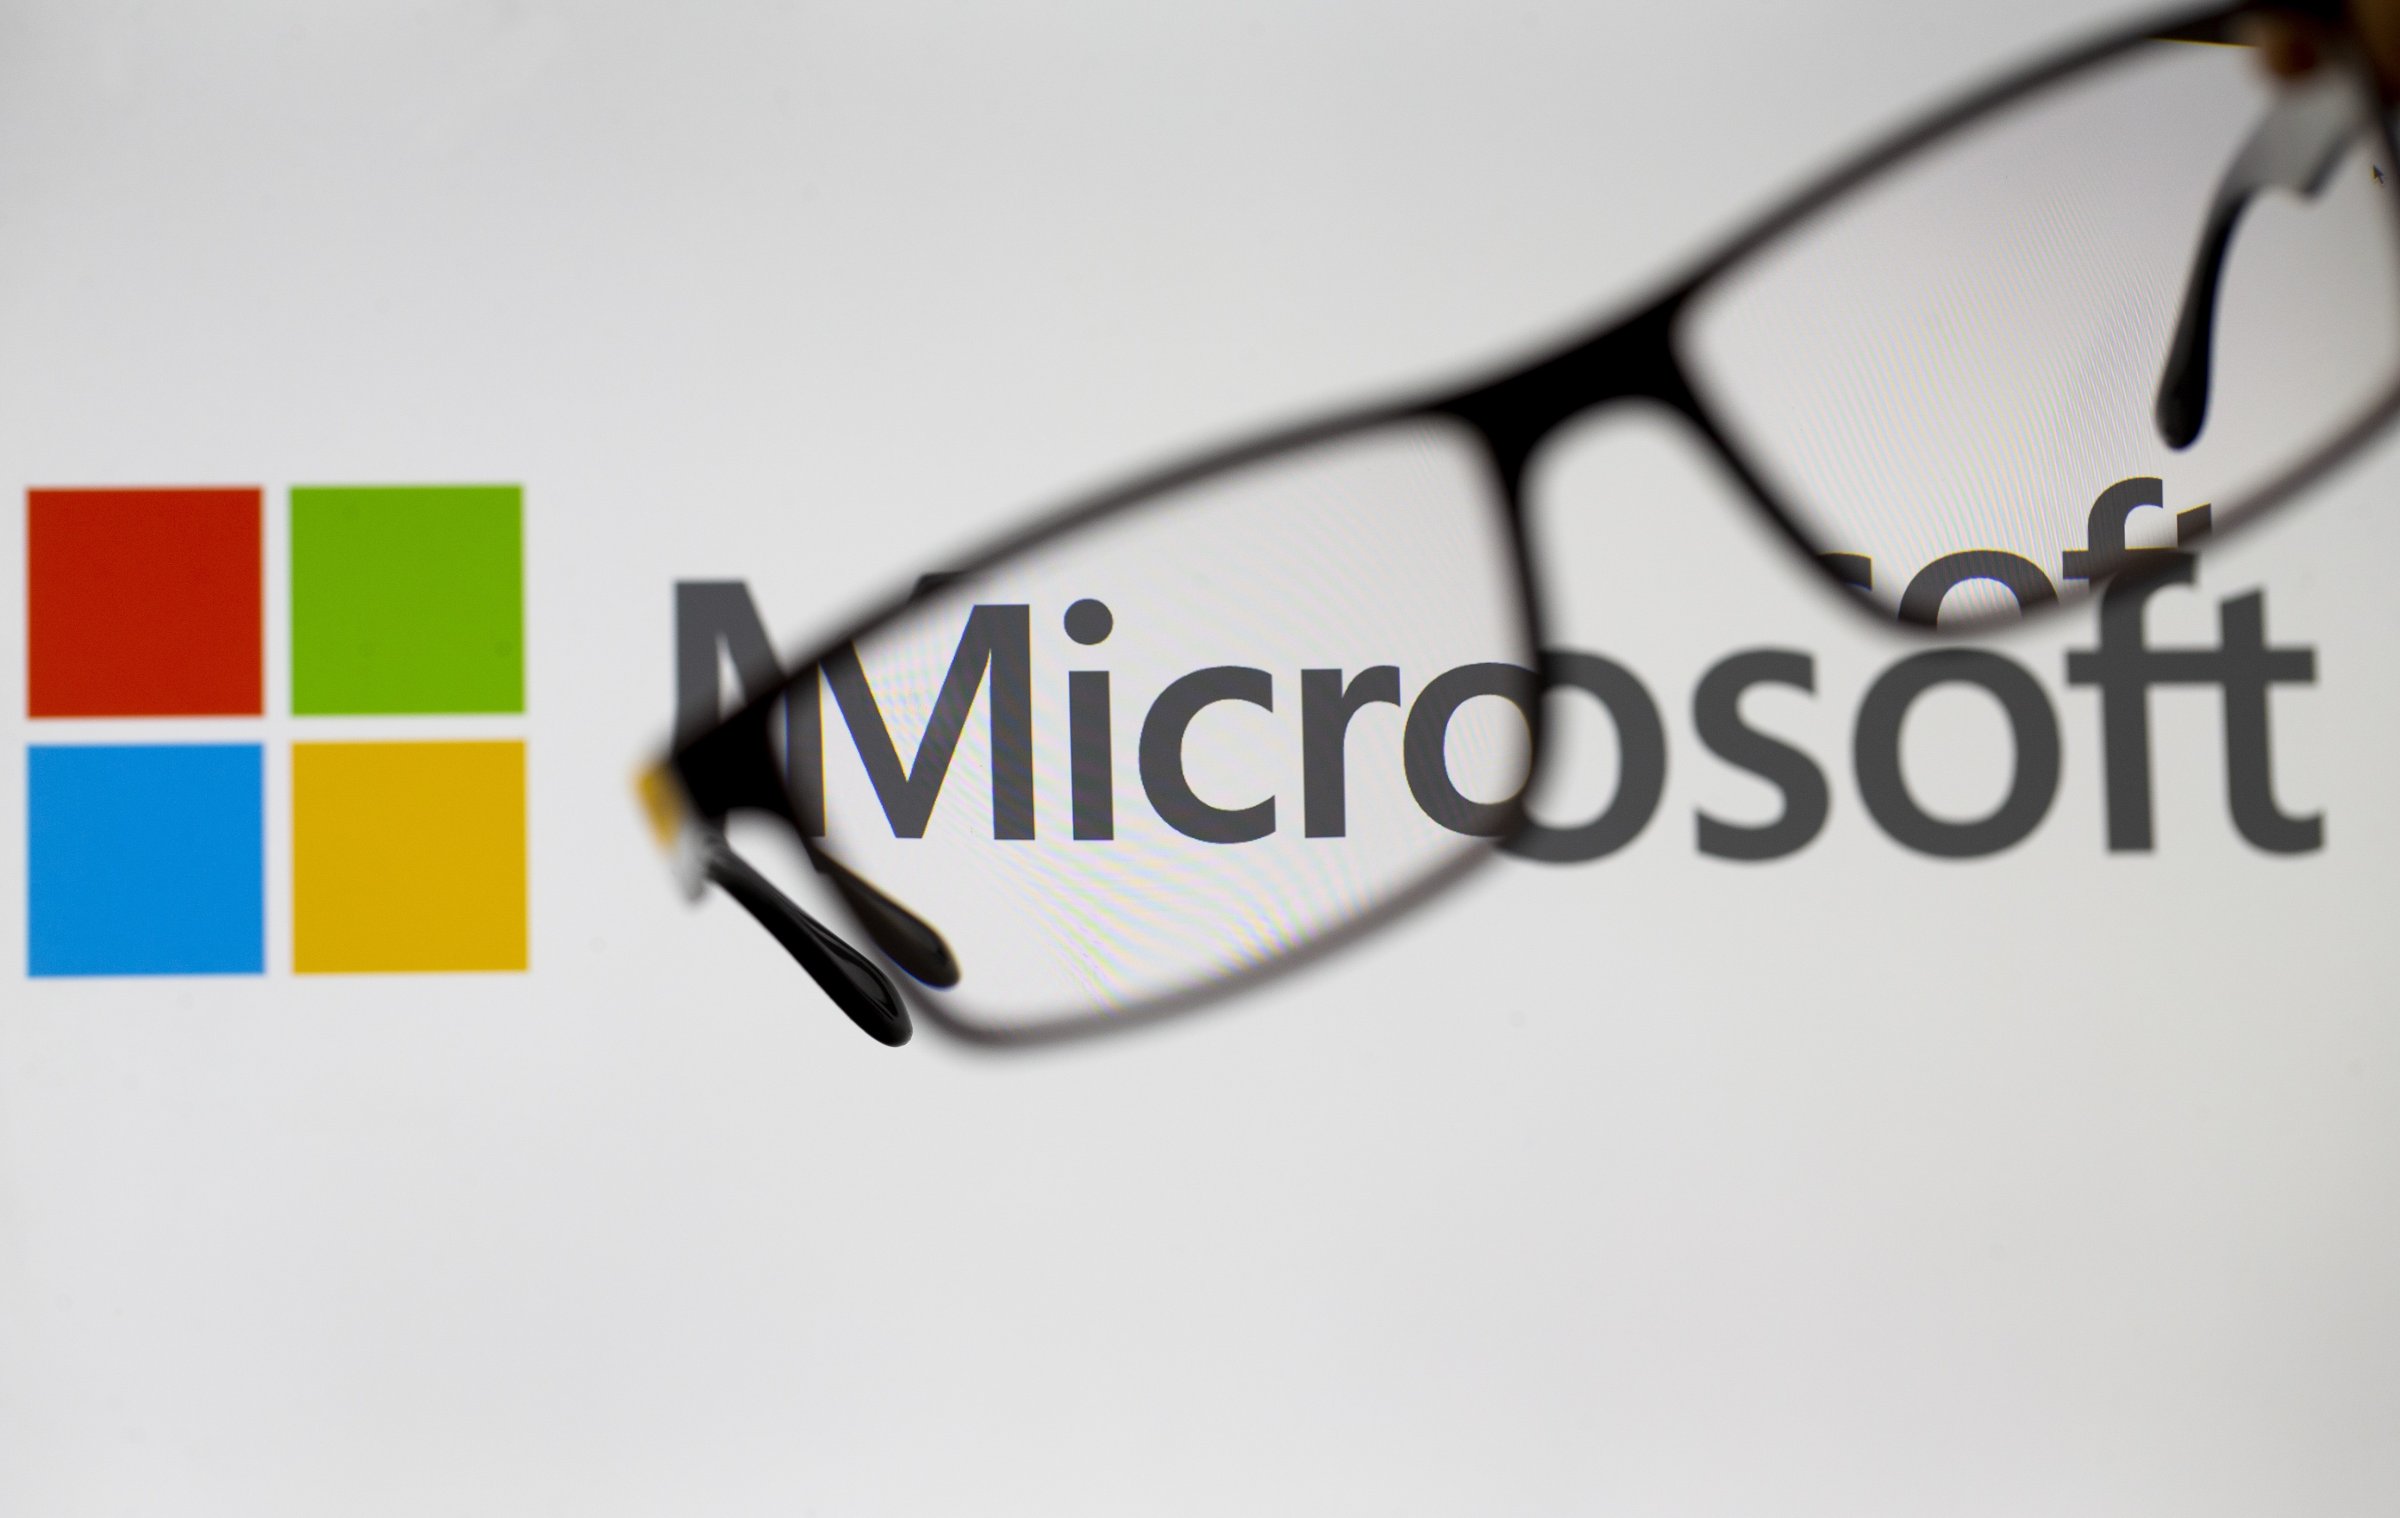 Microsoft's logo